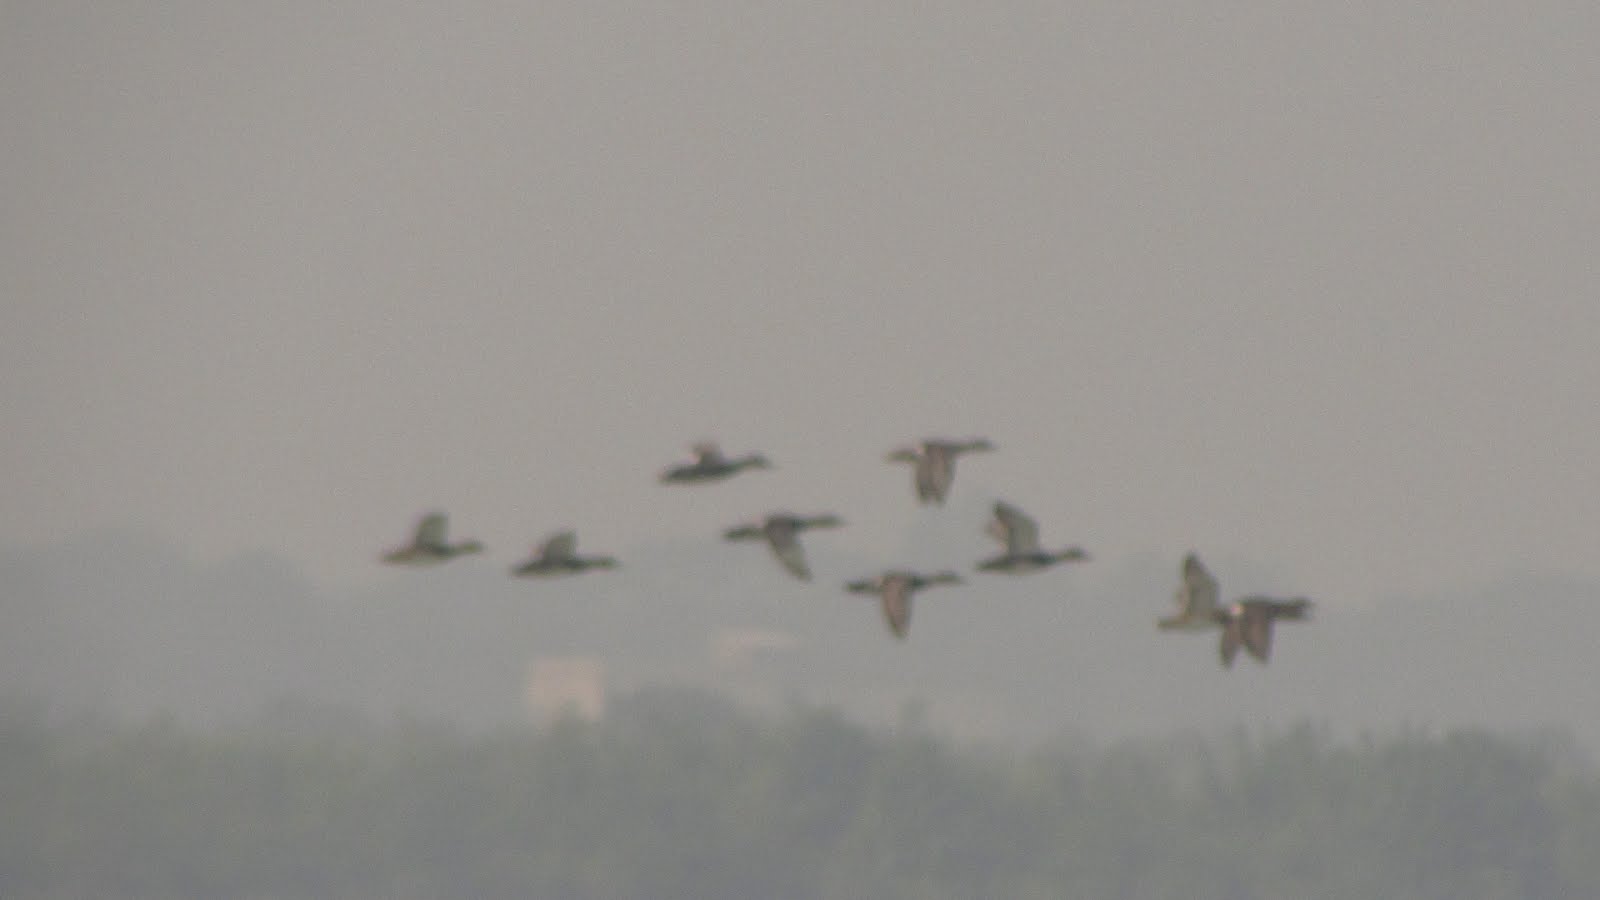 ducks taking to flight